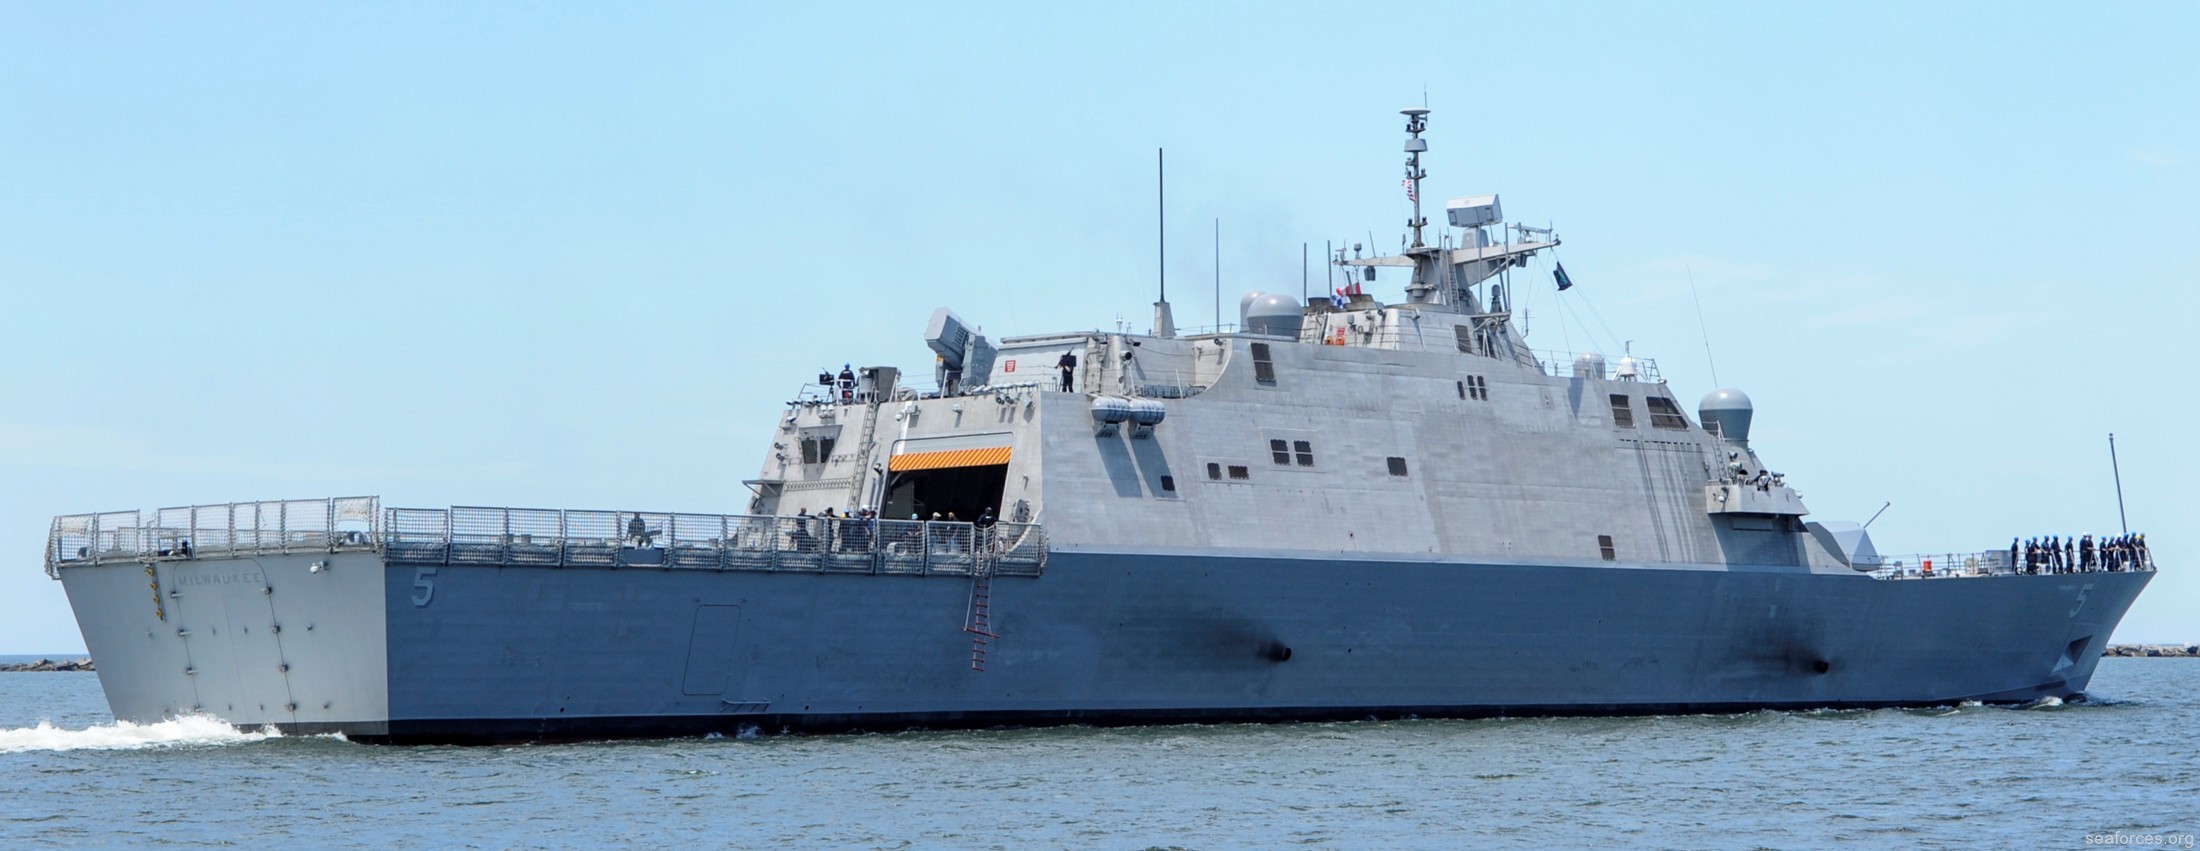 lcs-5 uss milwaukee littoral combat ship freedom class us navy 15 naval station mayport florida